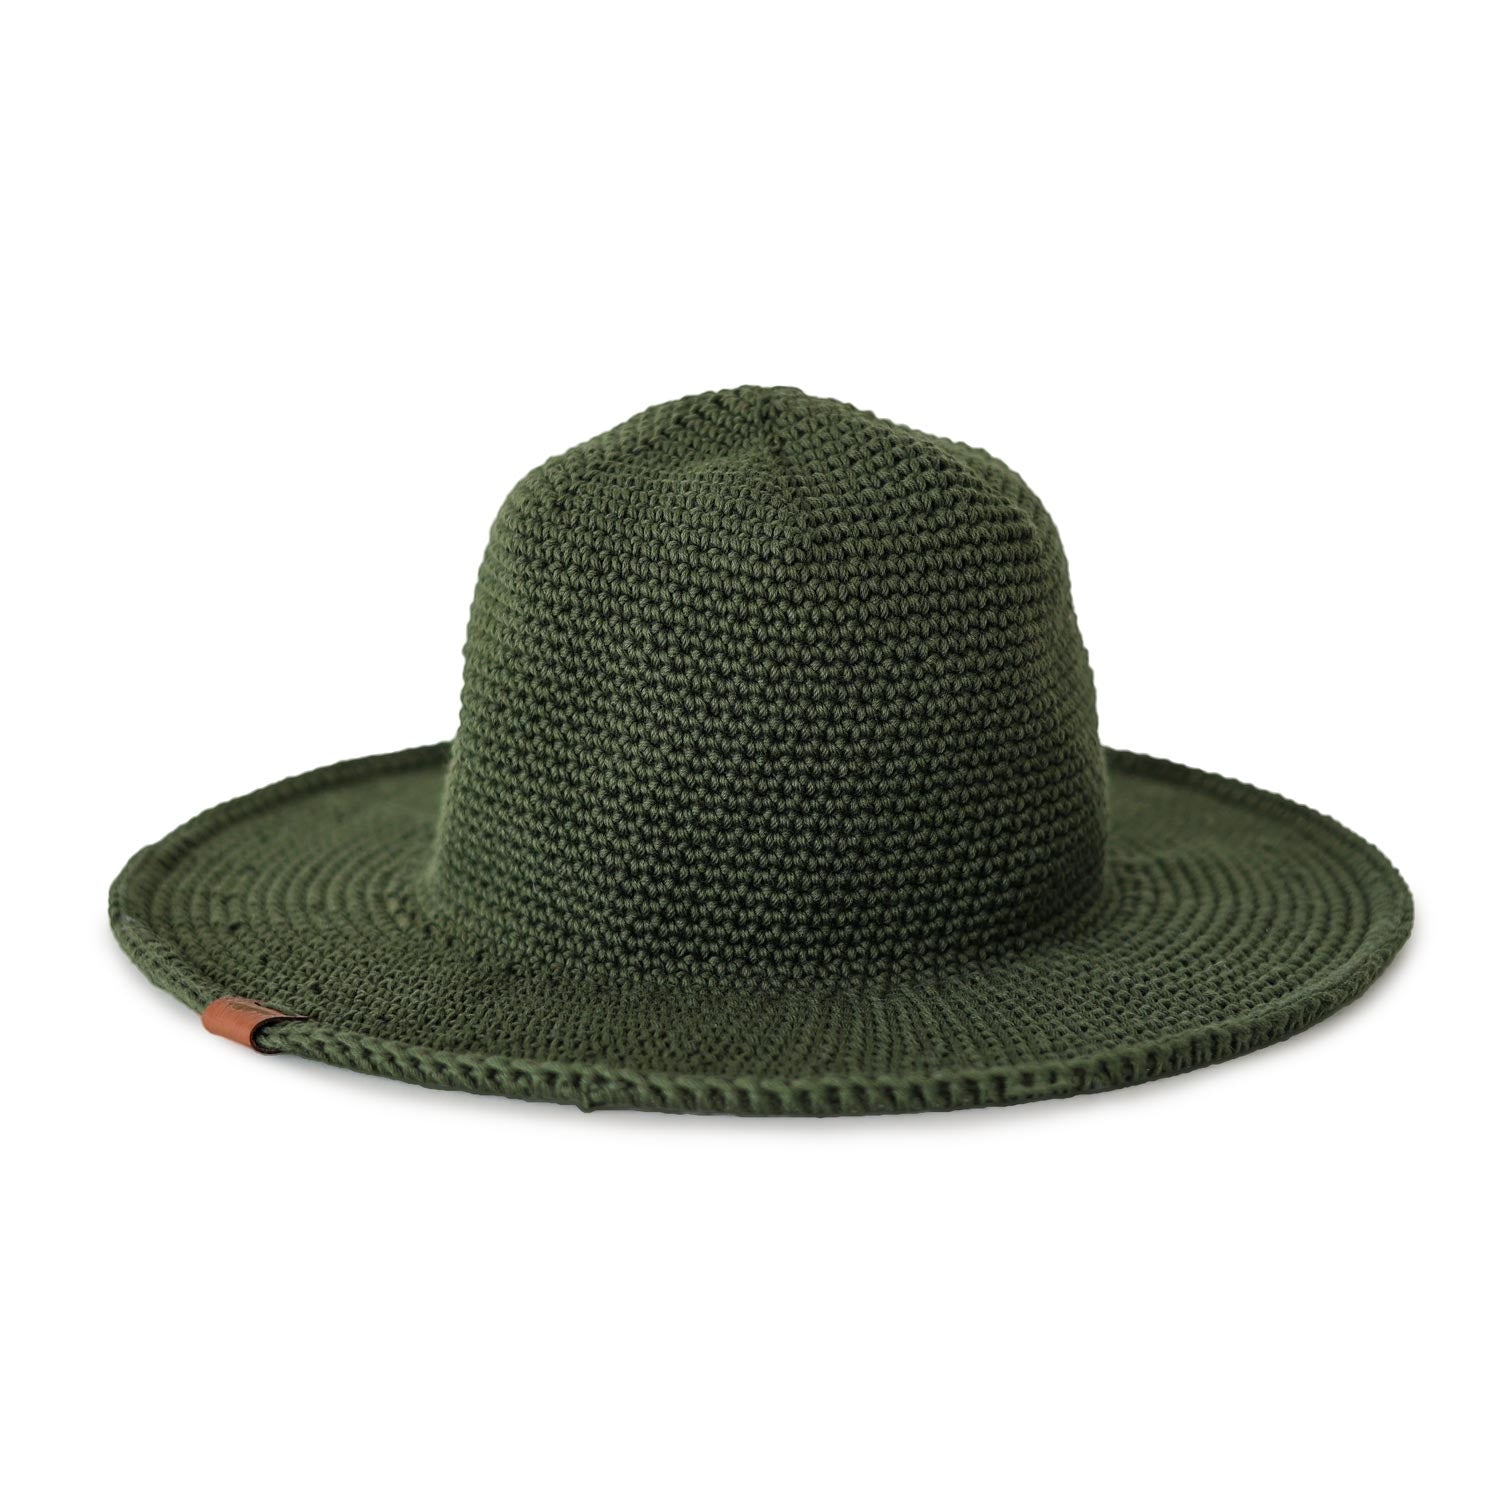 Packable Sun Hat in Leaf Color | Foldable Hats